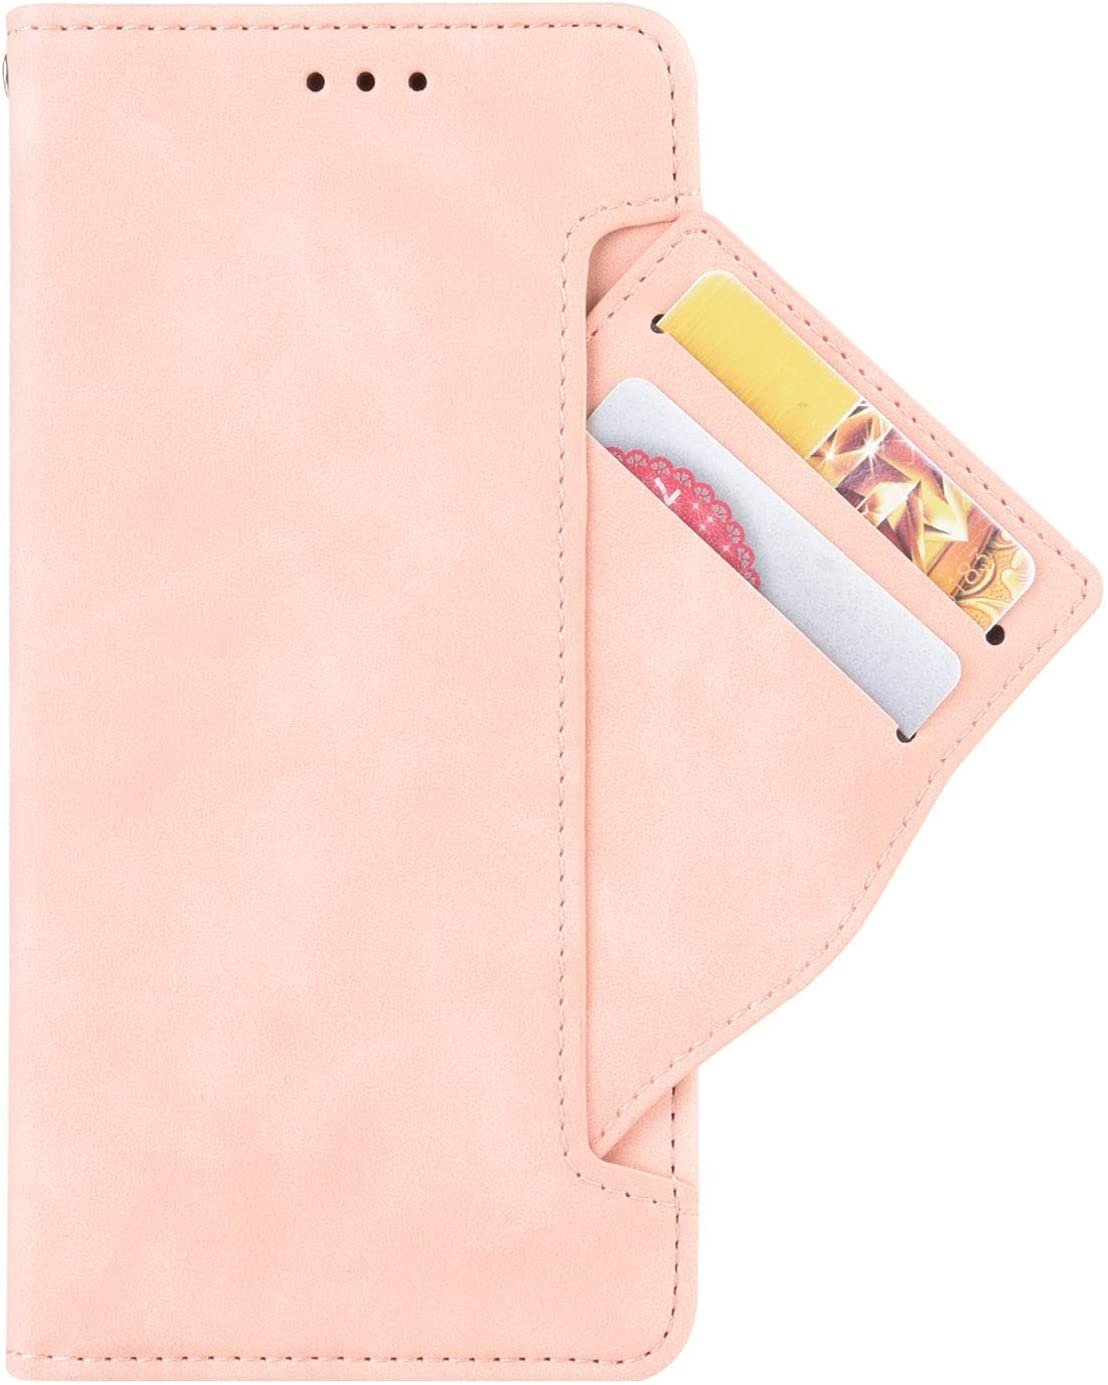 Damondy Leather Wallet Flip Case Pink Nokia G10 Nokia G20 Reco